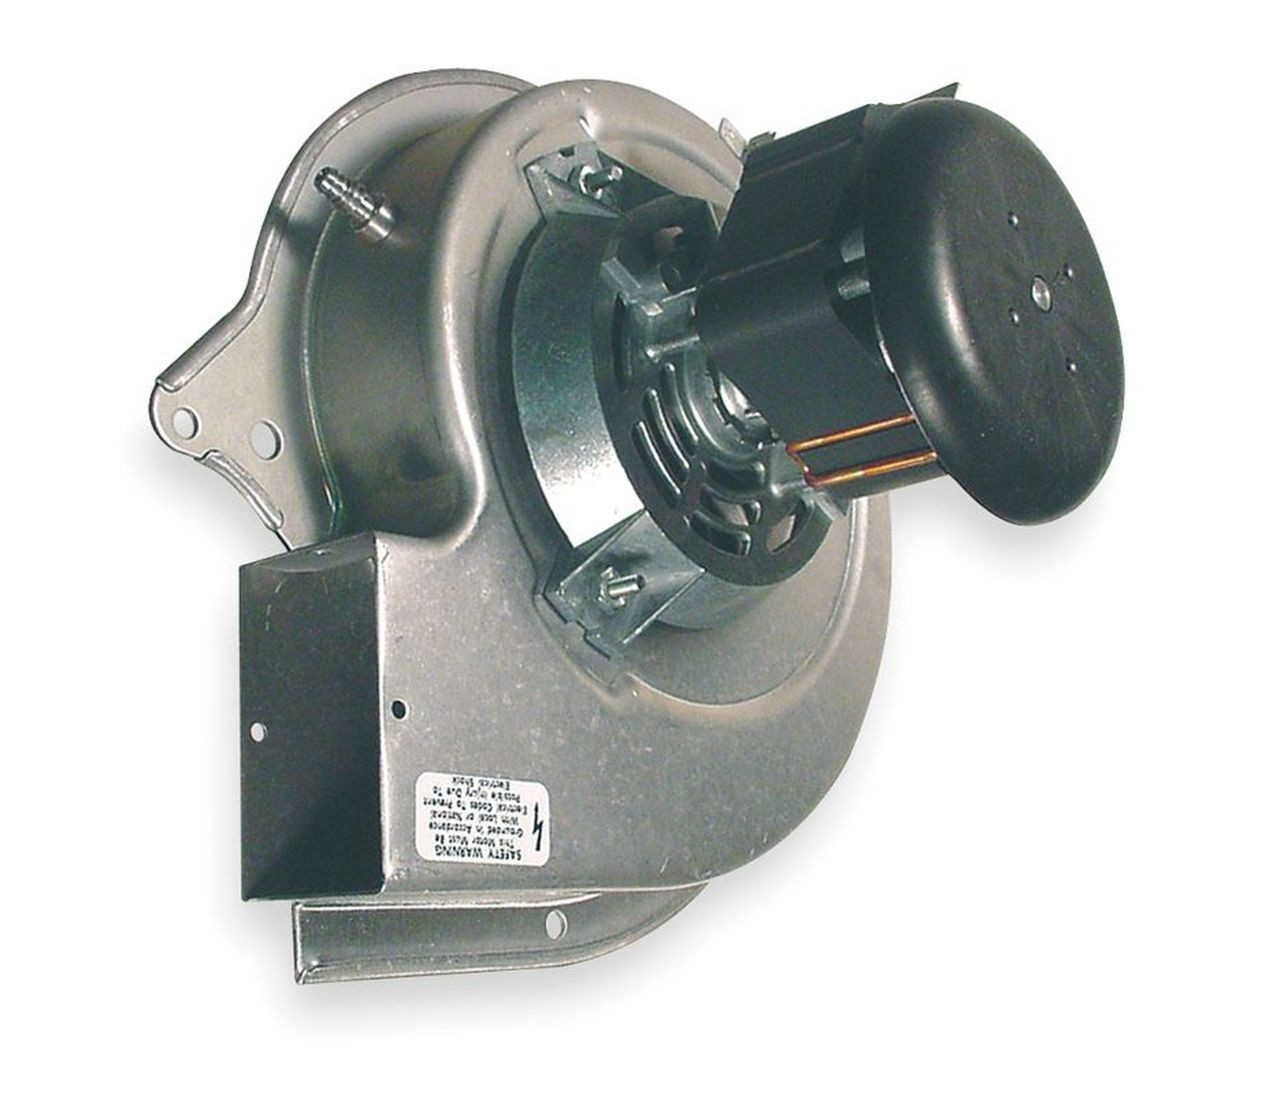 A157 Fasco, Goodman Furnace Draft Inducer Blower (J238-112-11064) 115V